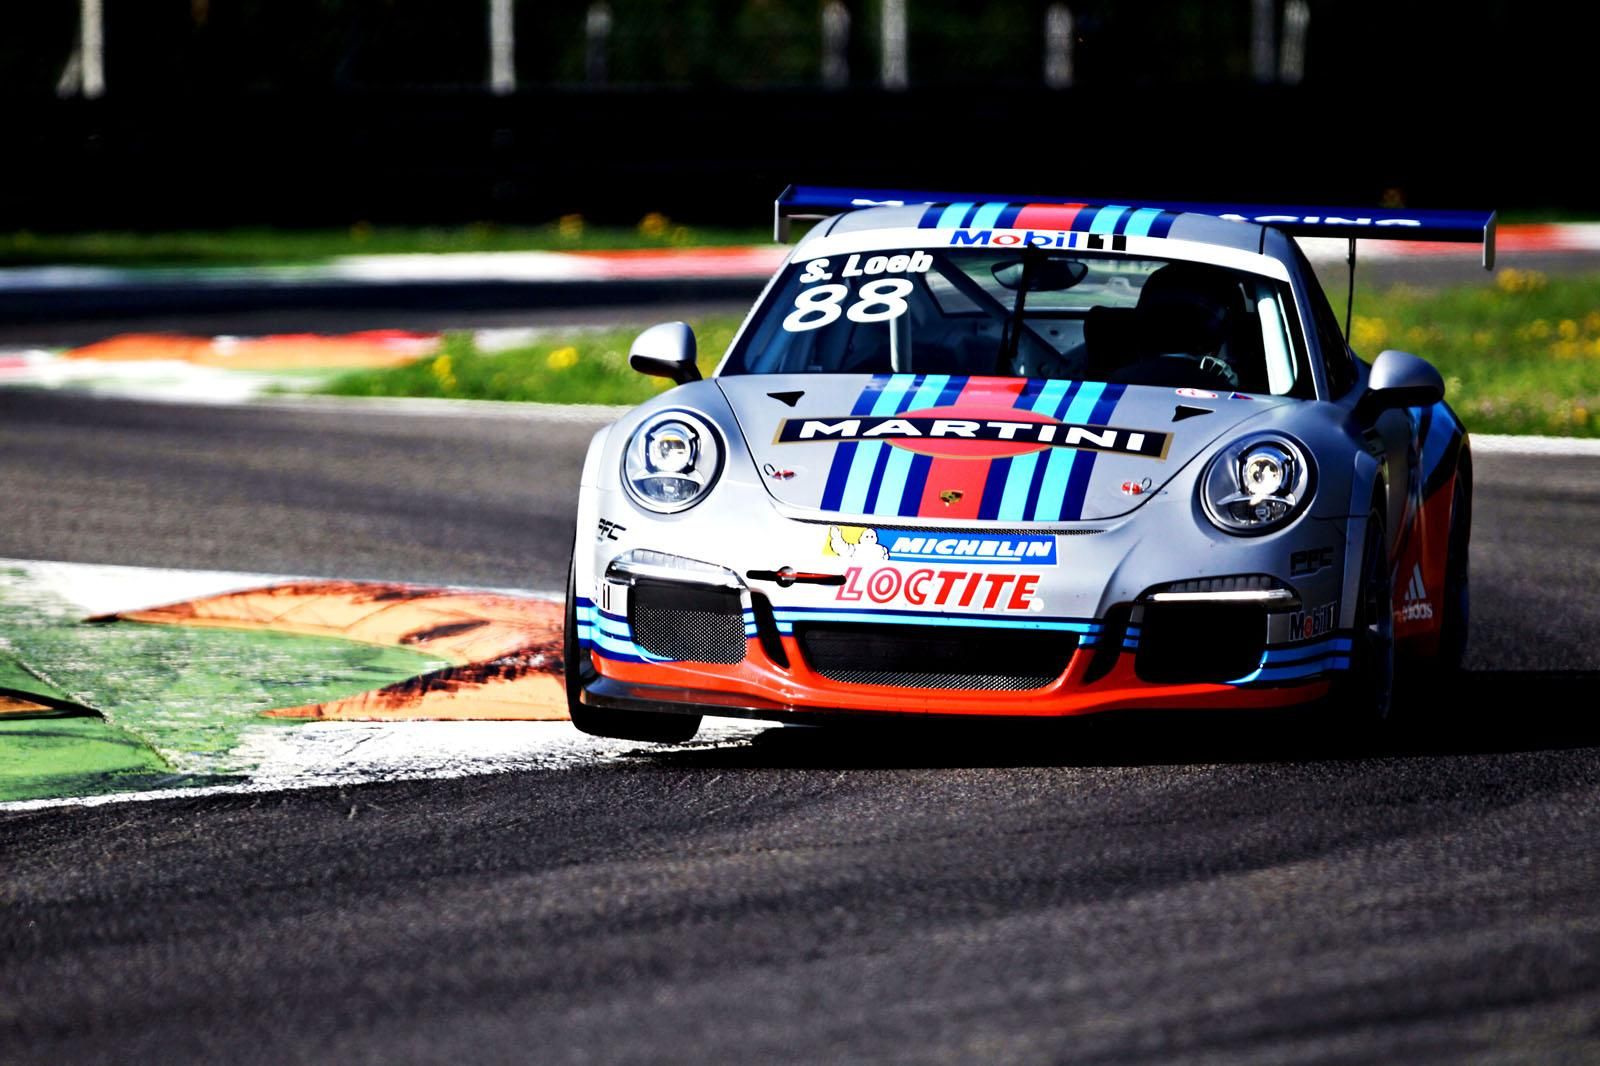 2013 Porsche 911 GT3 Cup Martini Racing